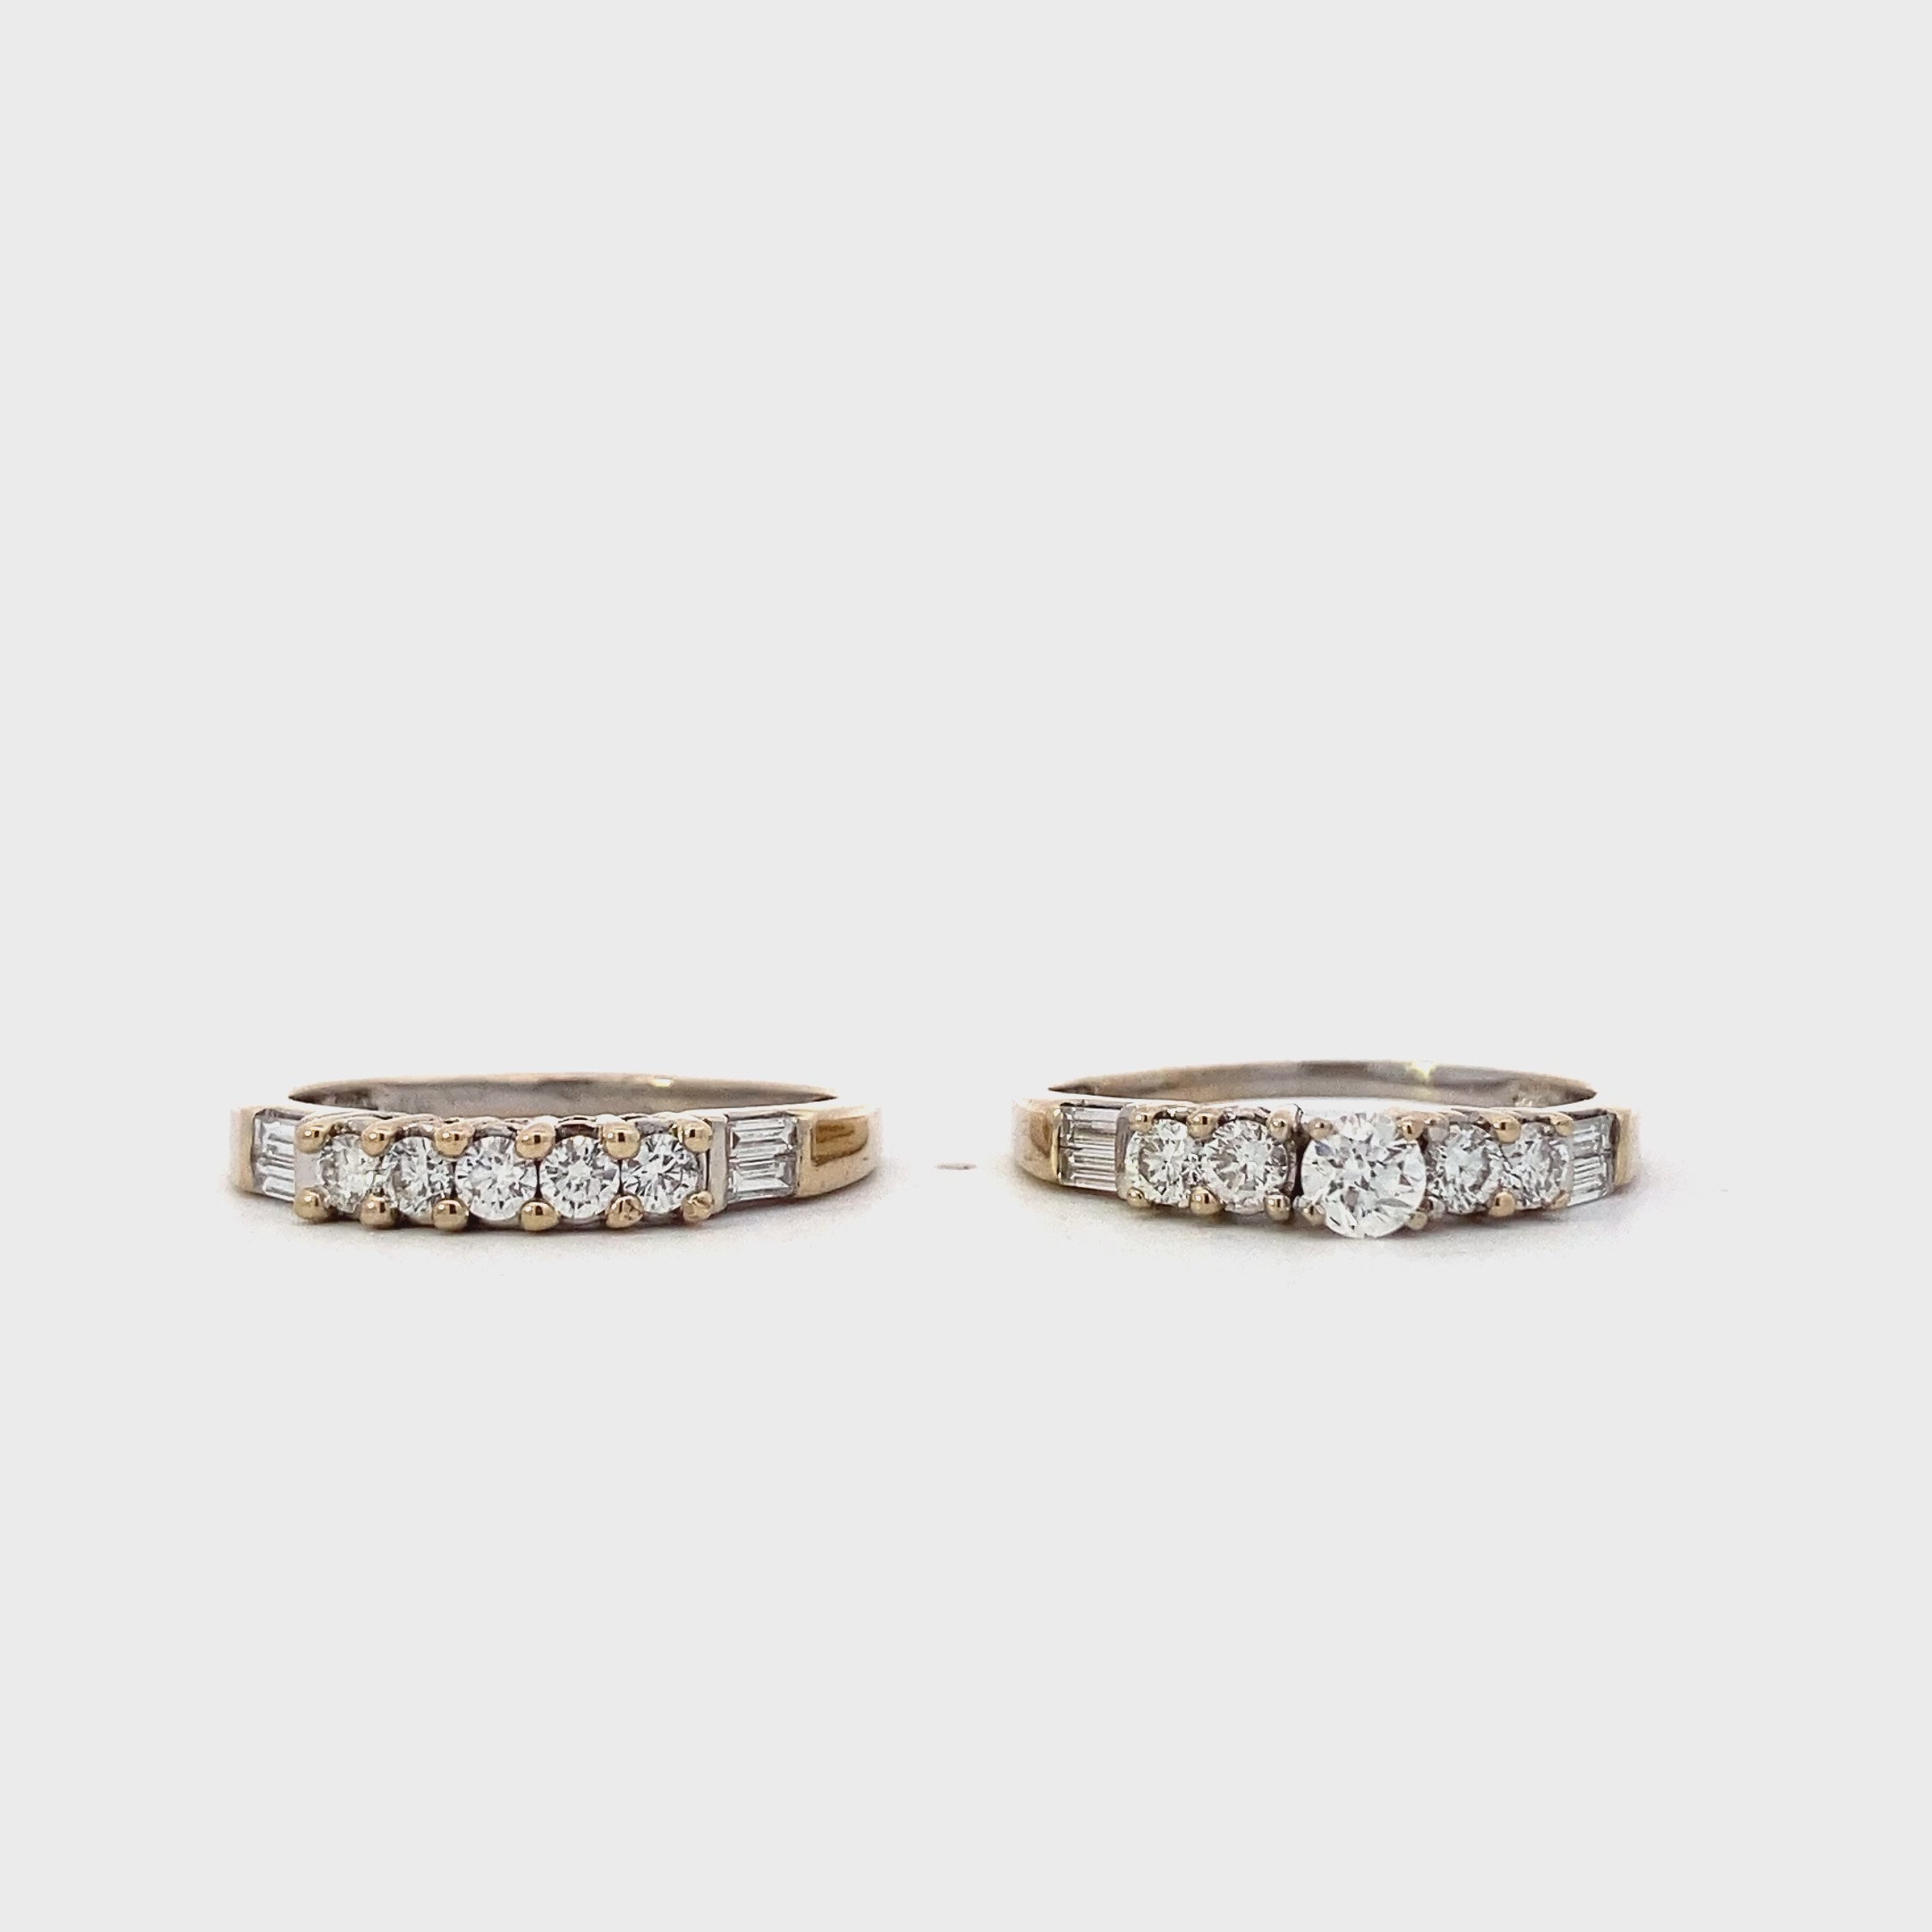 18K White Gold Diamond Engagement & Wedding Ring Set - 1.01ct